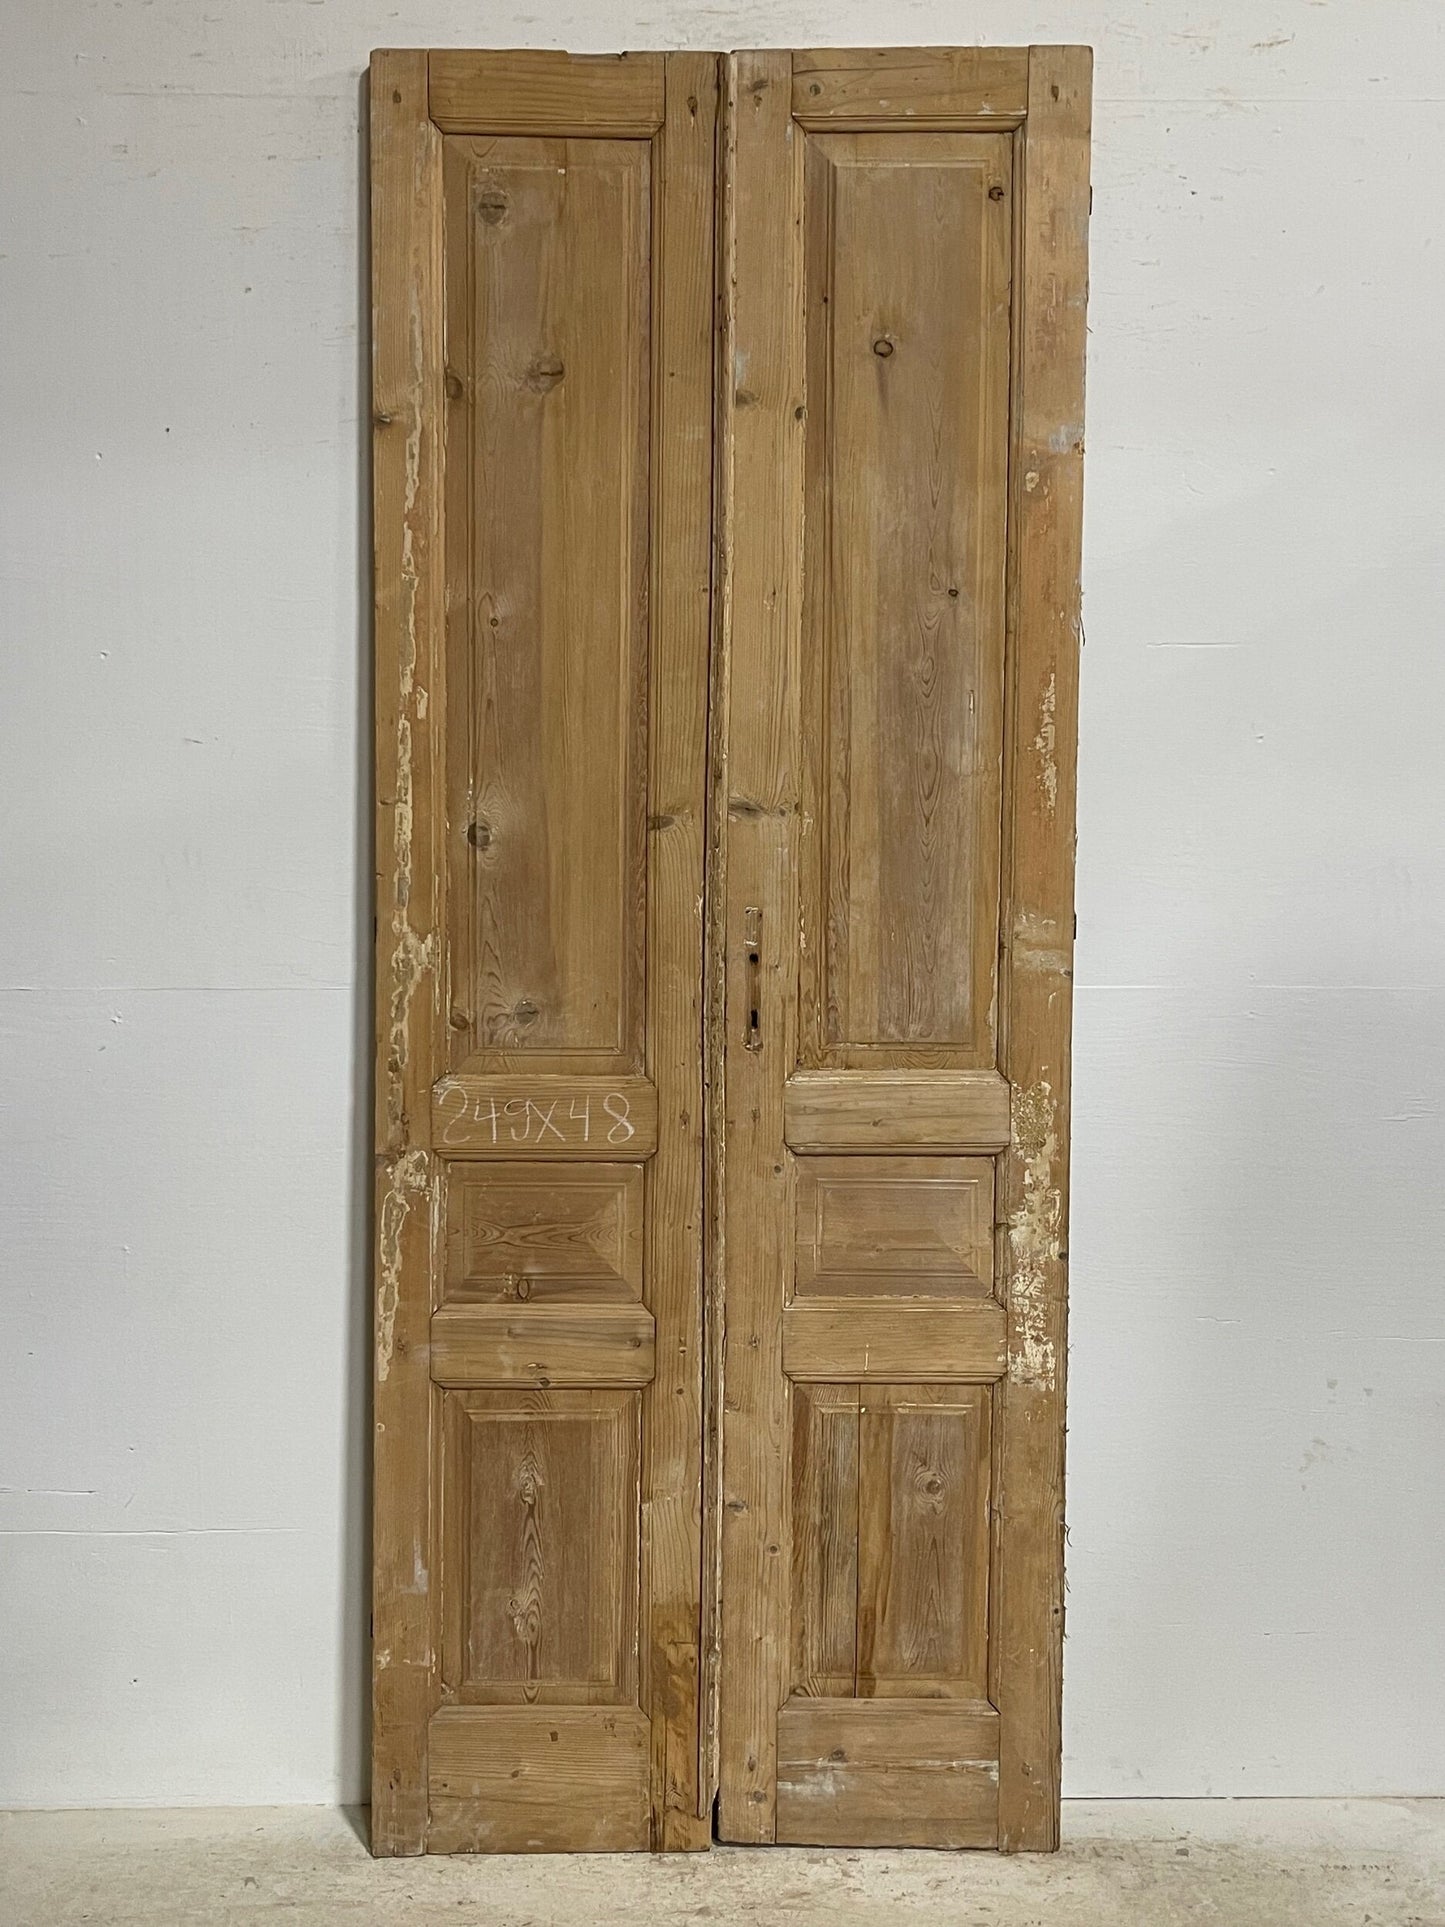 Antique French doors (98.25x38.5) H0134s